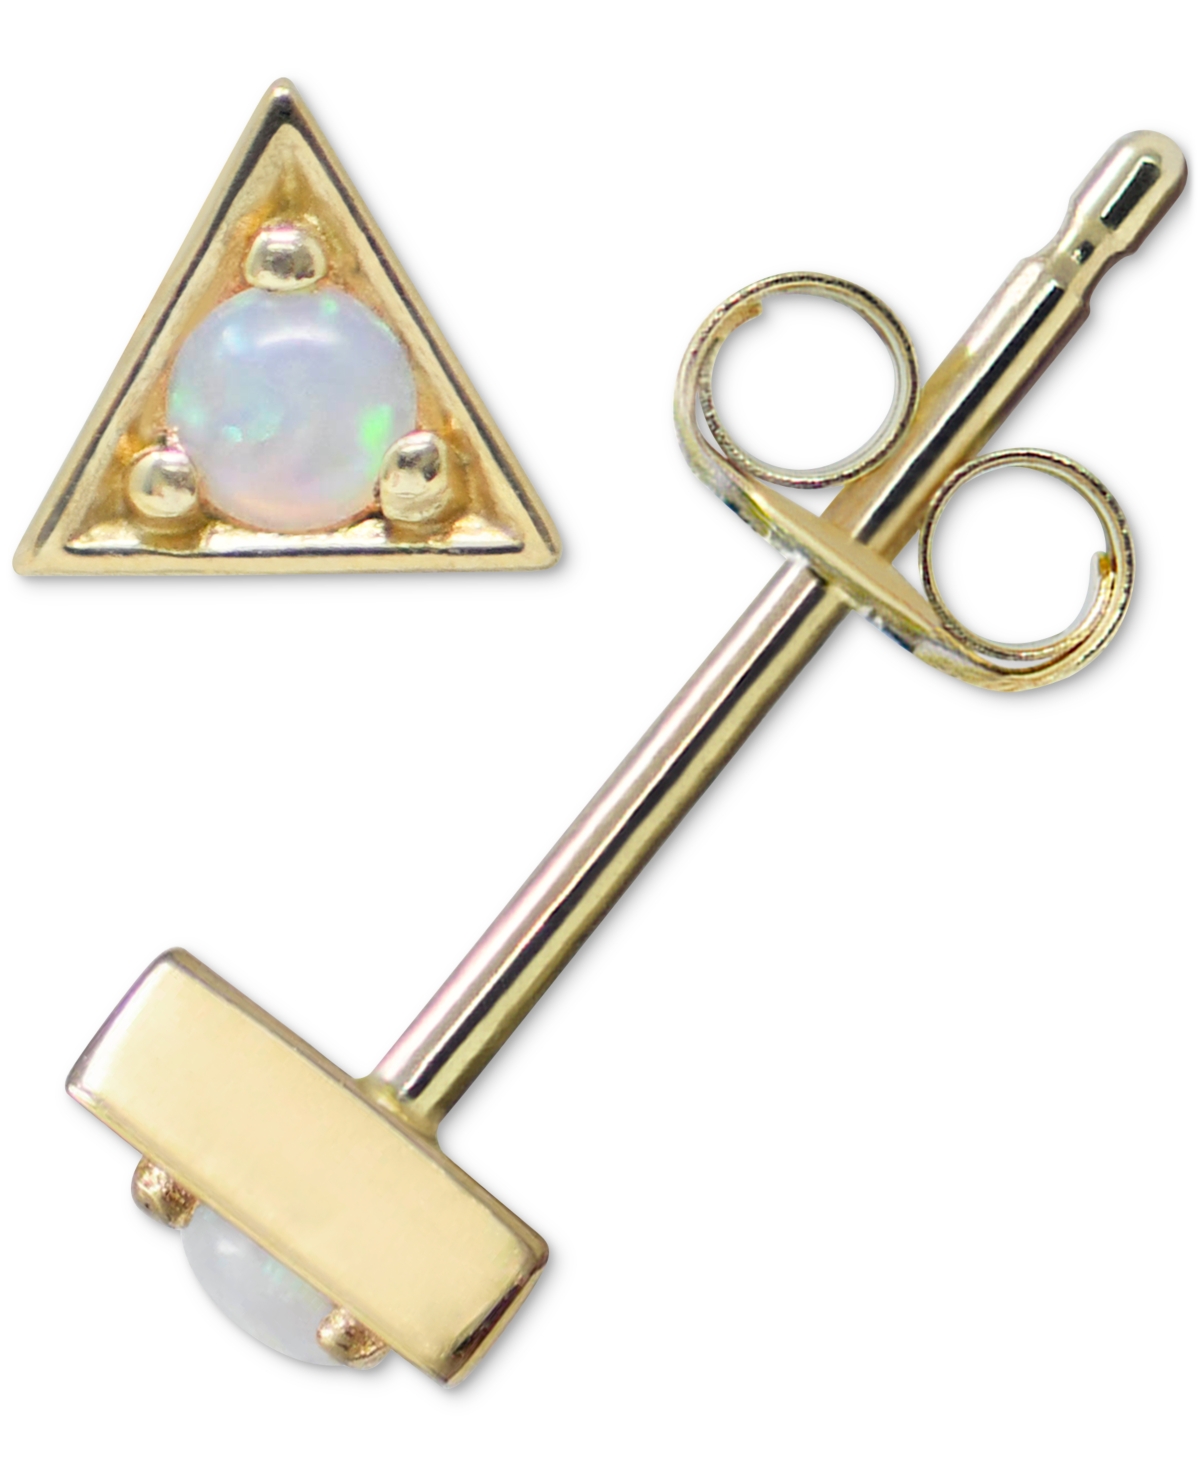 Anzie Emerald Triangle Stud Earrings in 14k Gold (Also in Turquoise, Australian Opal, & Sapphire)